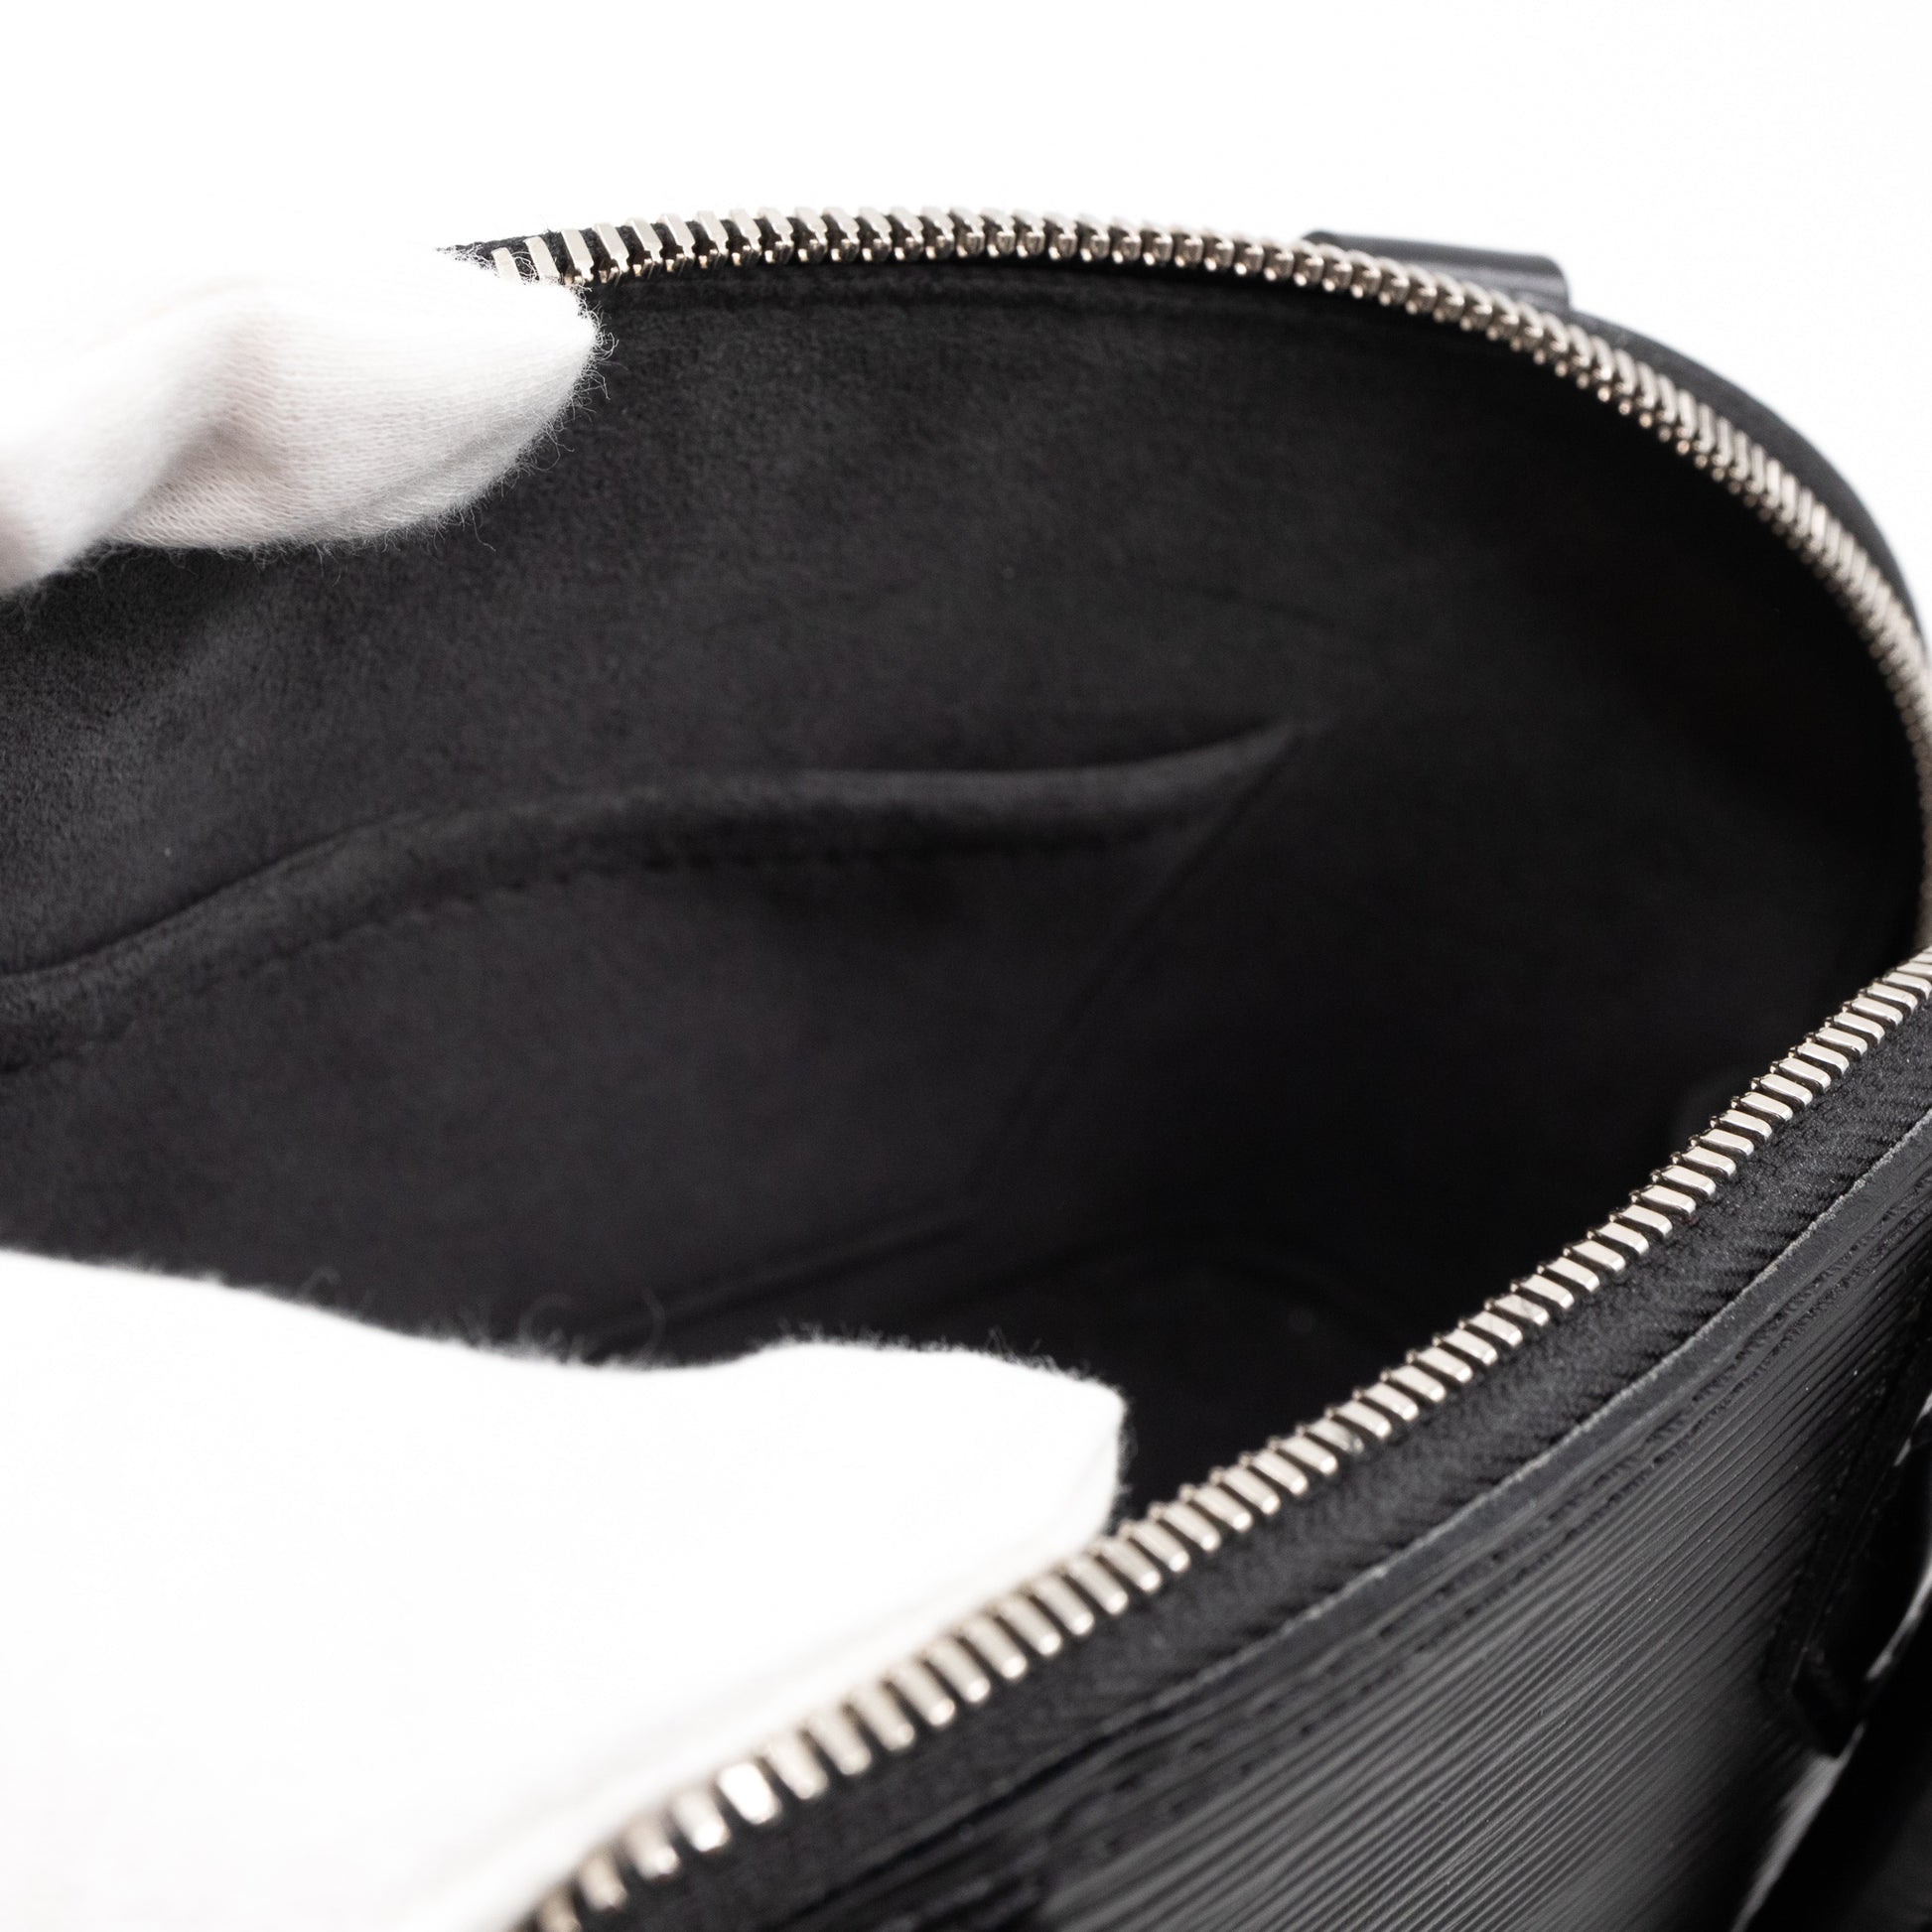 Louis Vuitton - Epi Jasmin Black Clutch bag - Catawiki